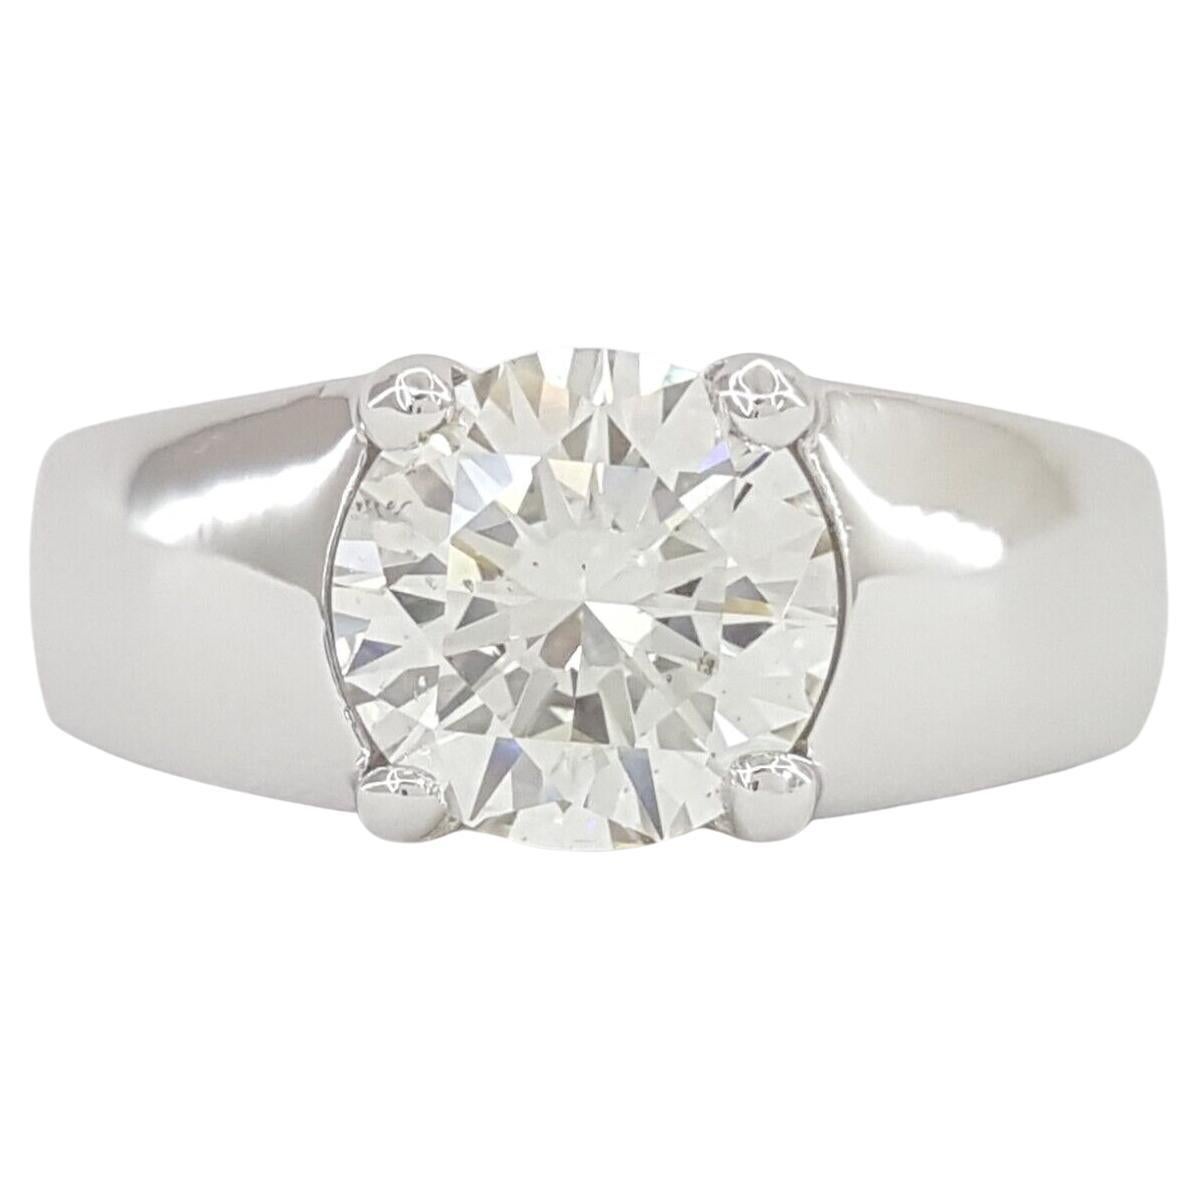 Bvlgari Round Brilliant Cut Diamond Solitaire Engagement Ring For Sale